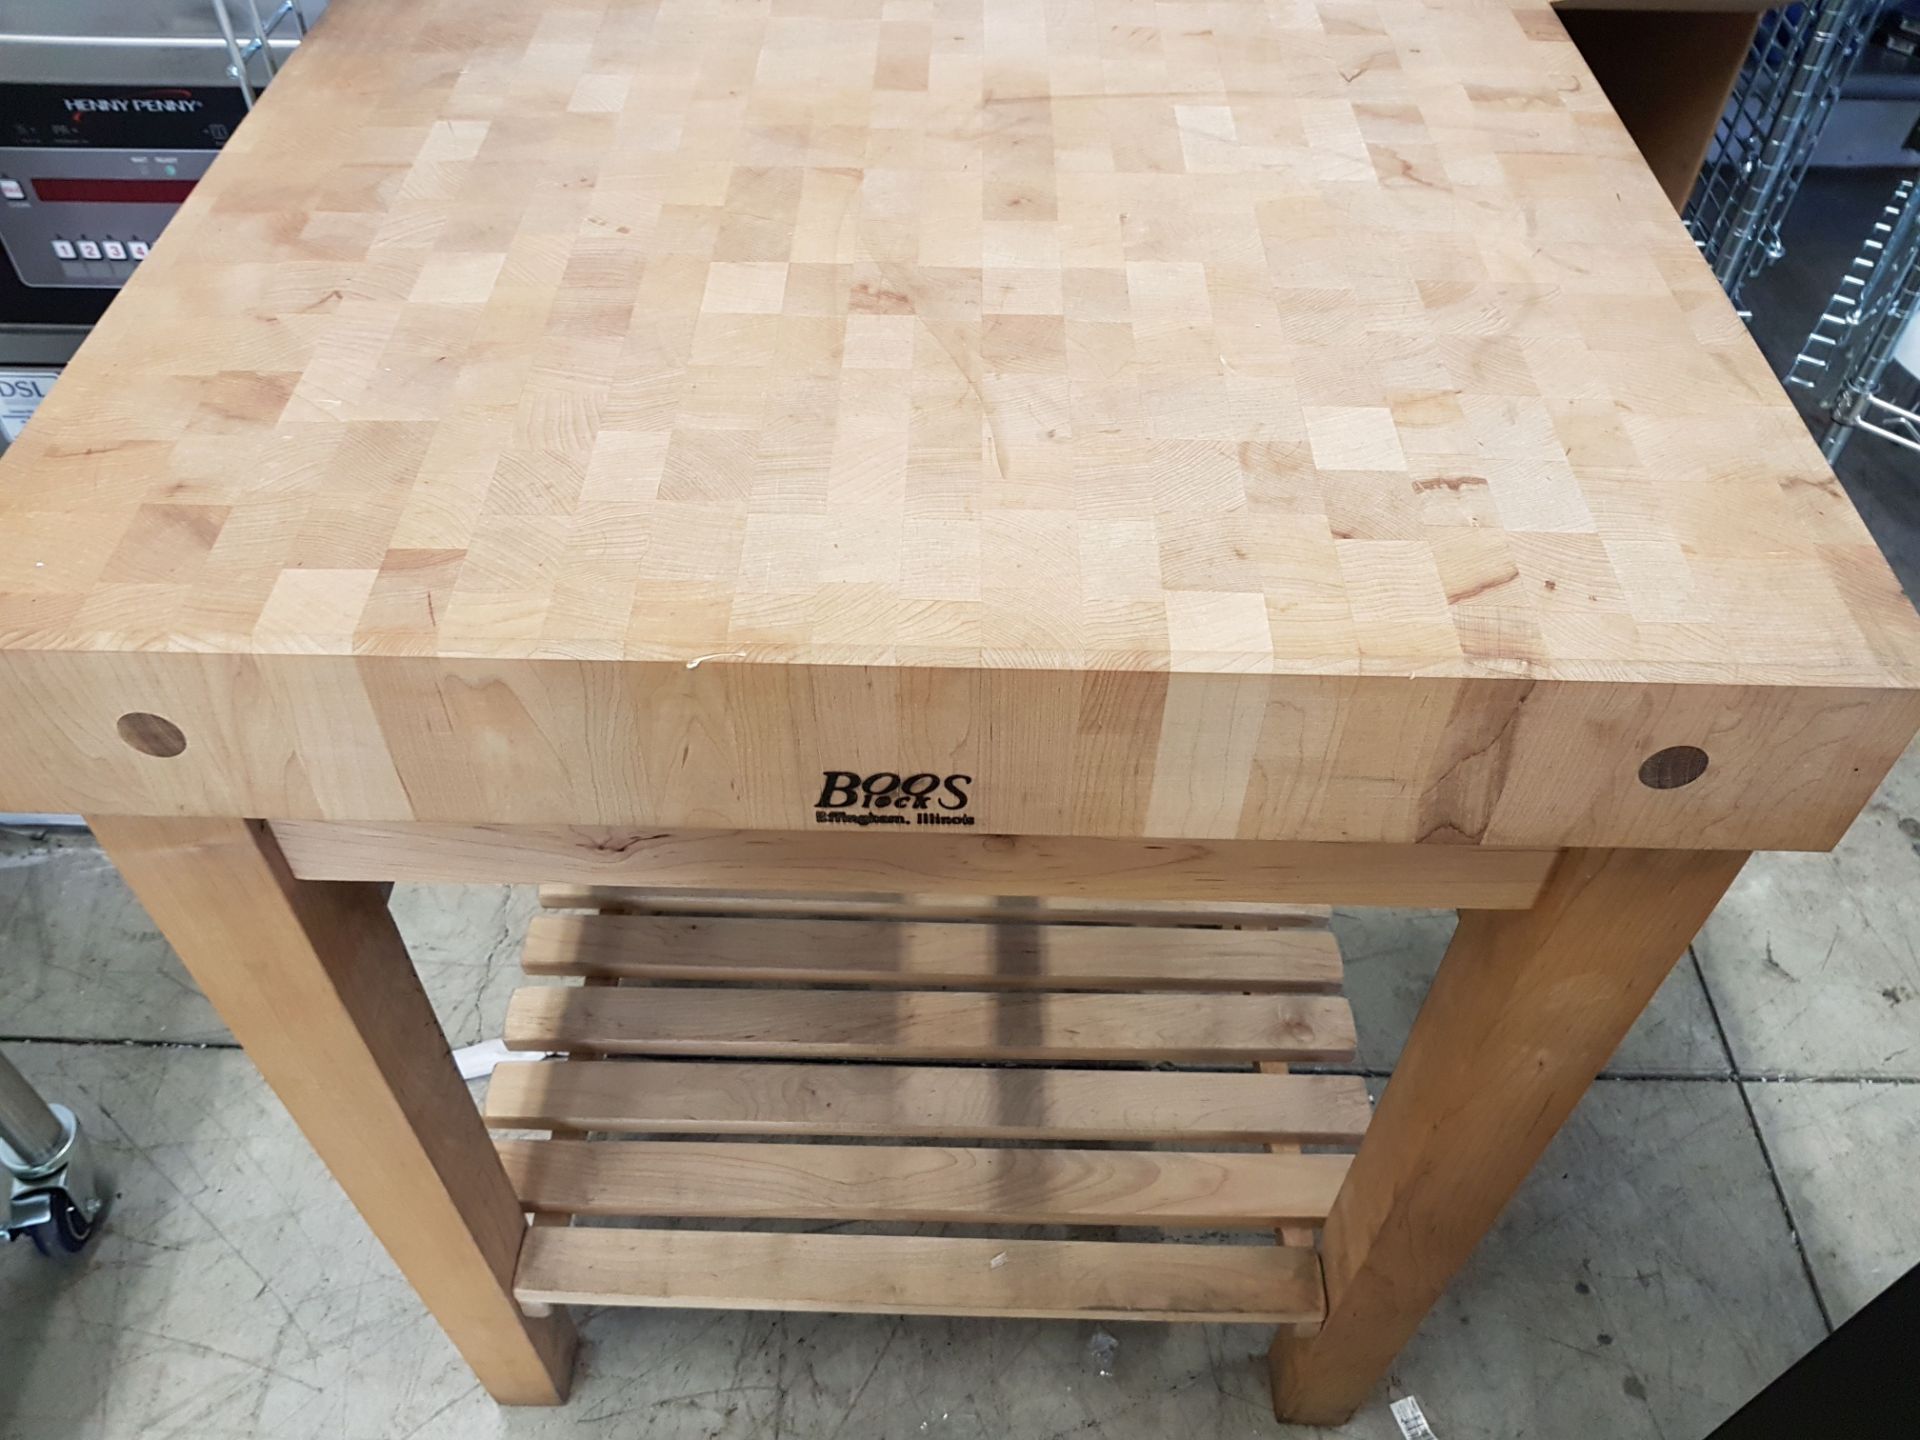 Light Wood Butcher Block Table - 24" X 30" X 5" Thick Top - John Boos - Image 2 of 2